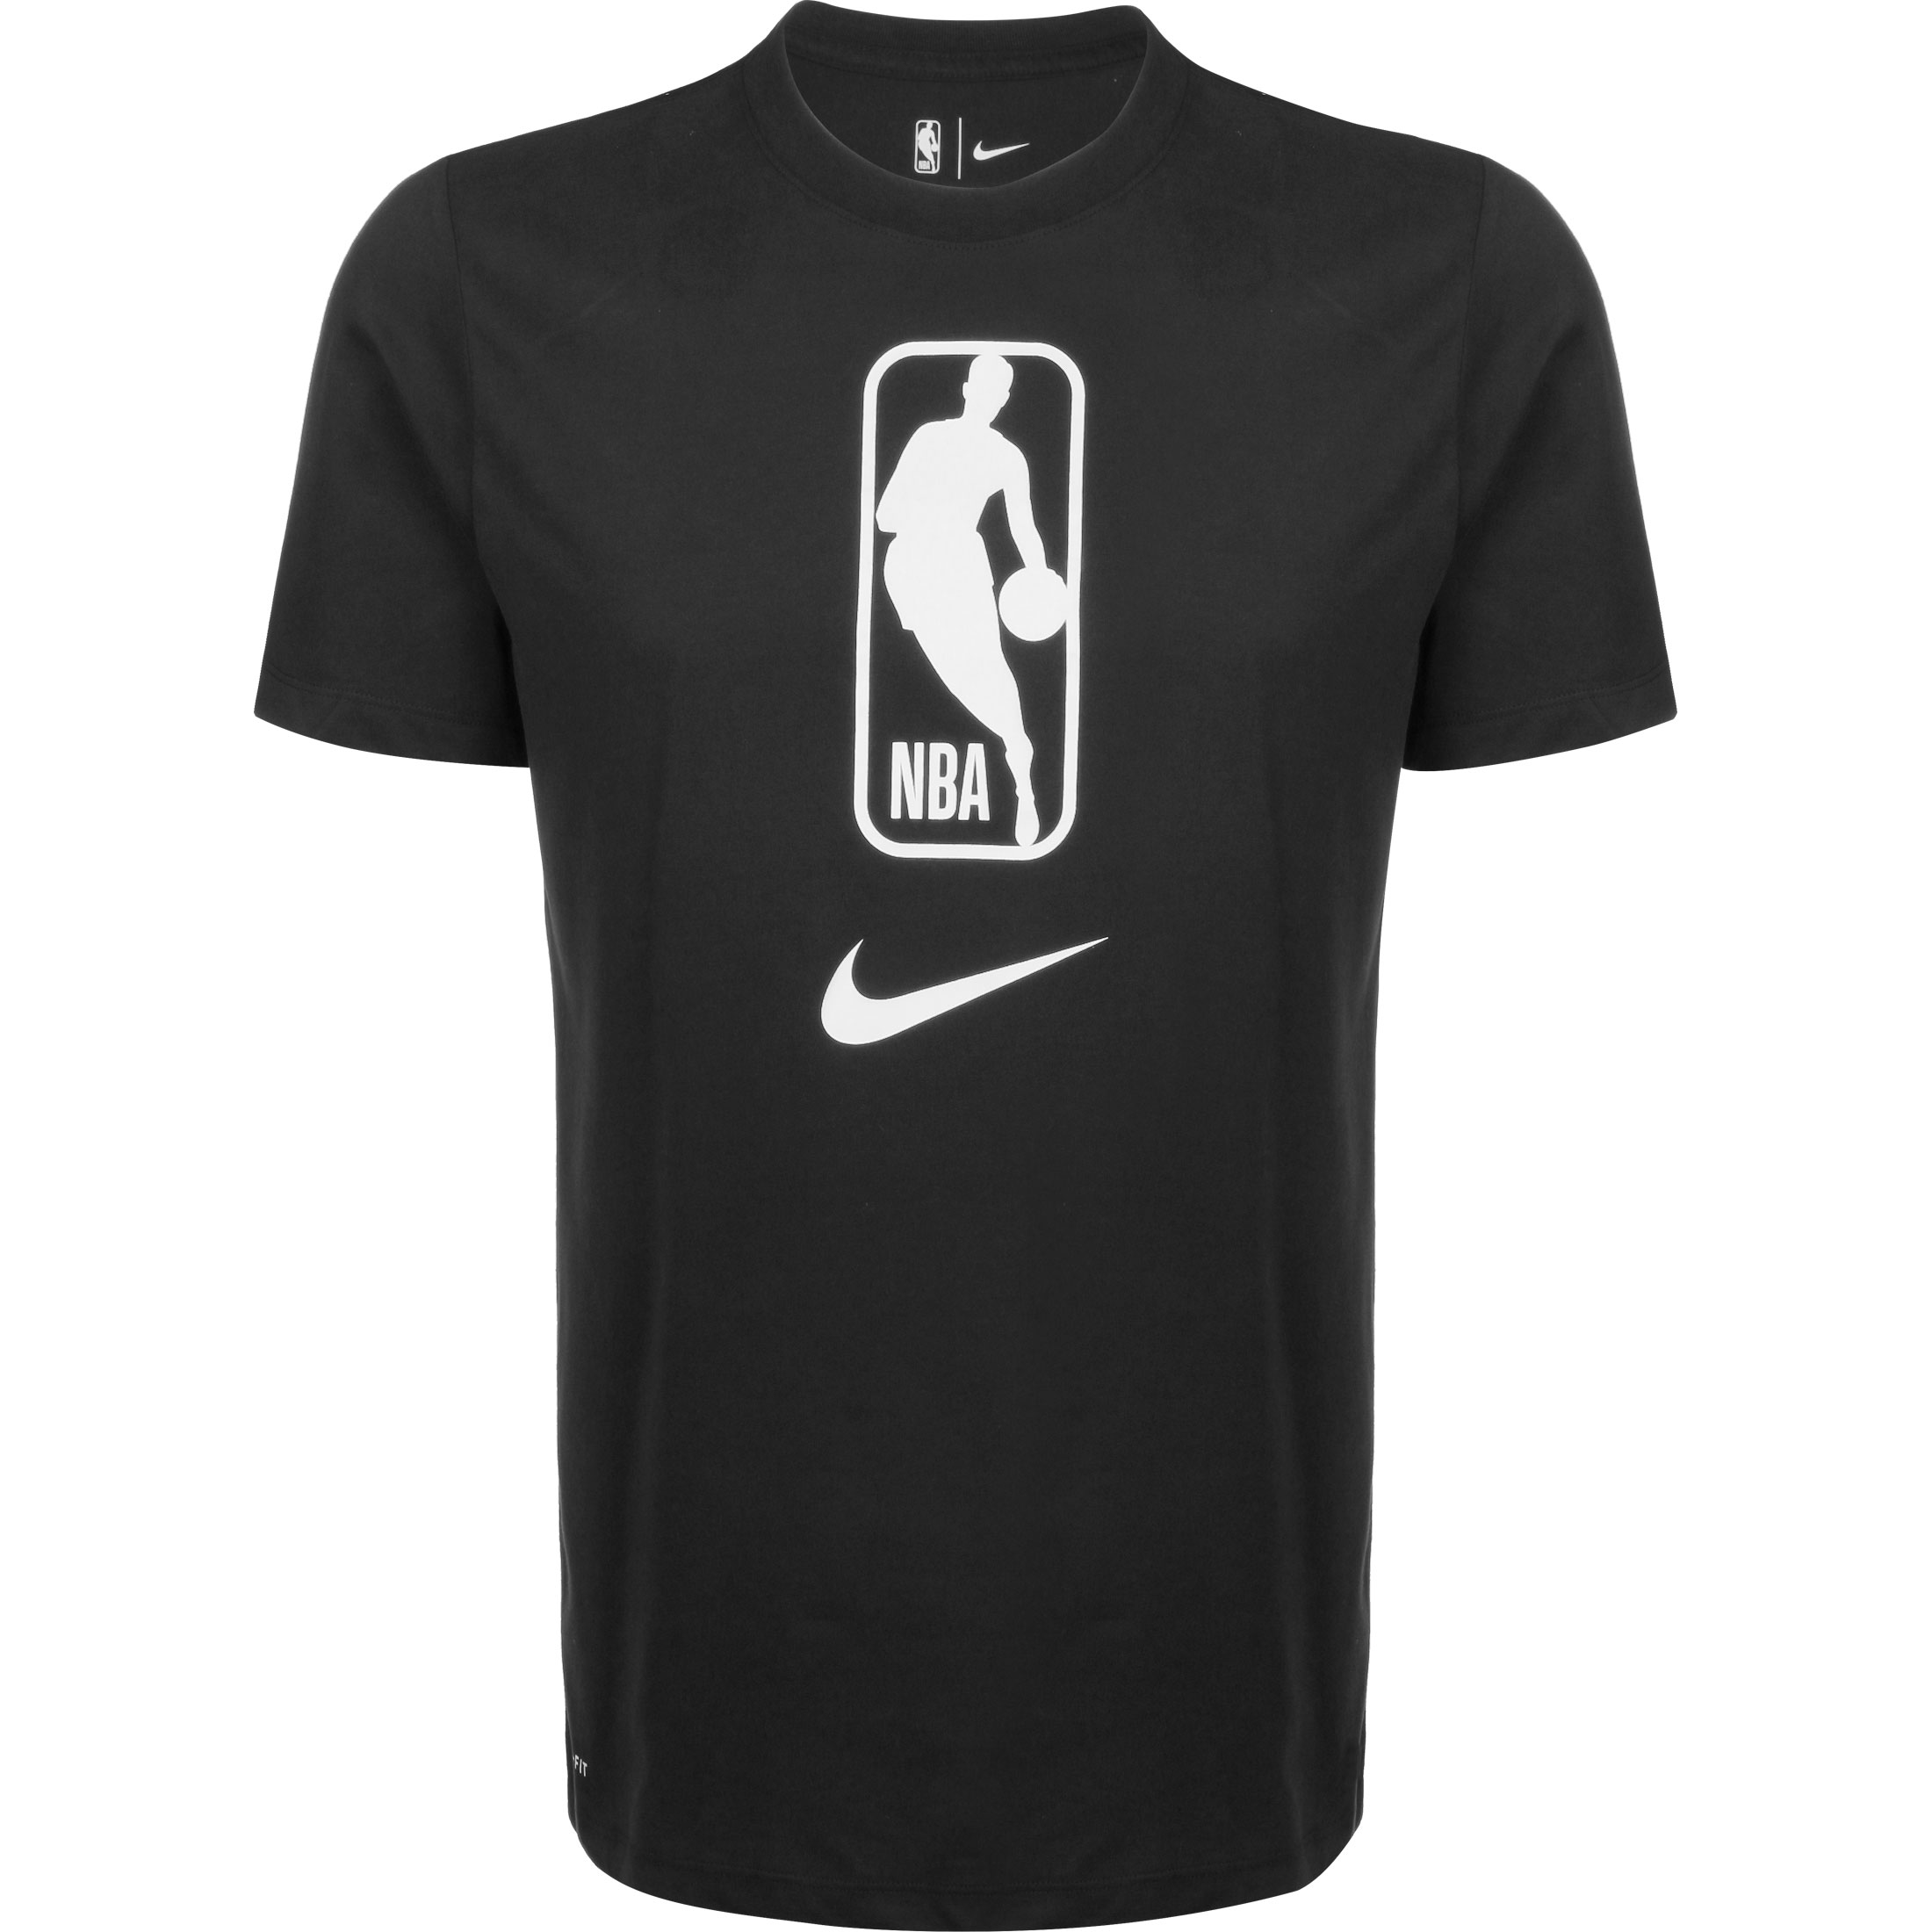 Nike Performance NBA Team 31 Dry Trainingsshirt Herren schwarz / weiß ...